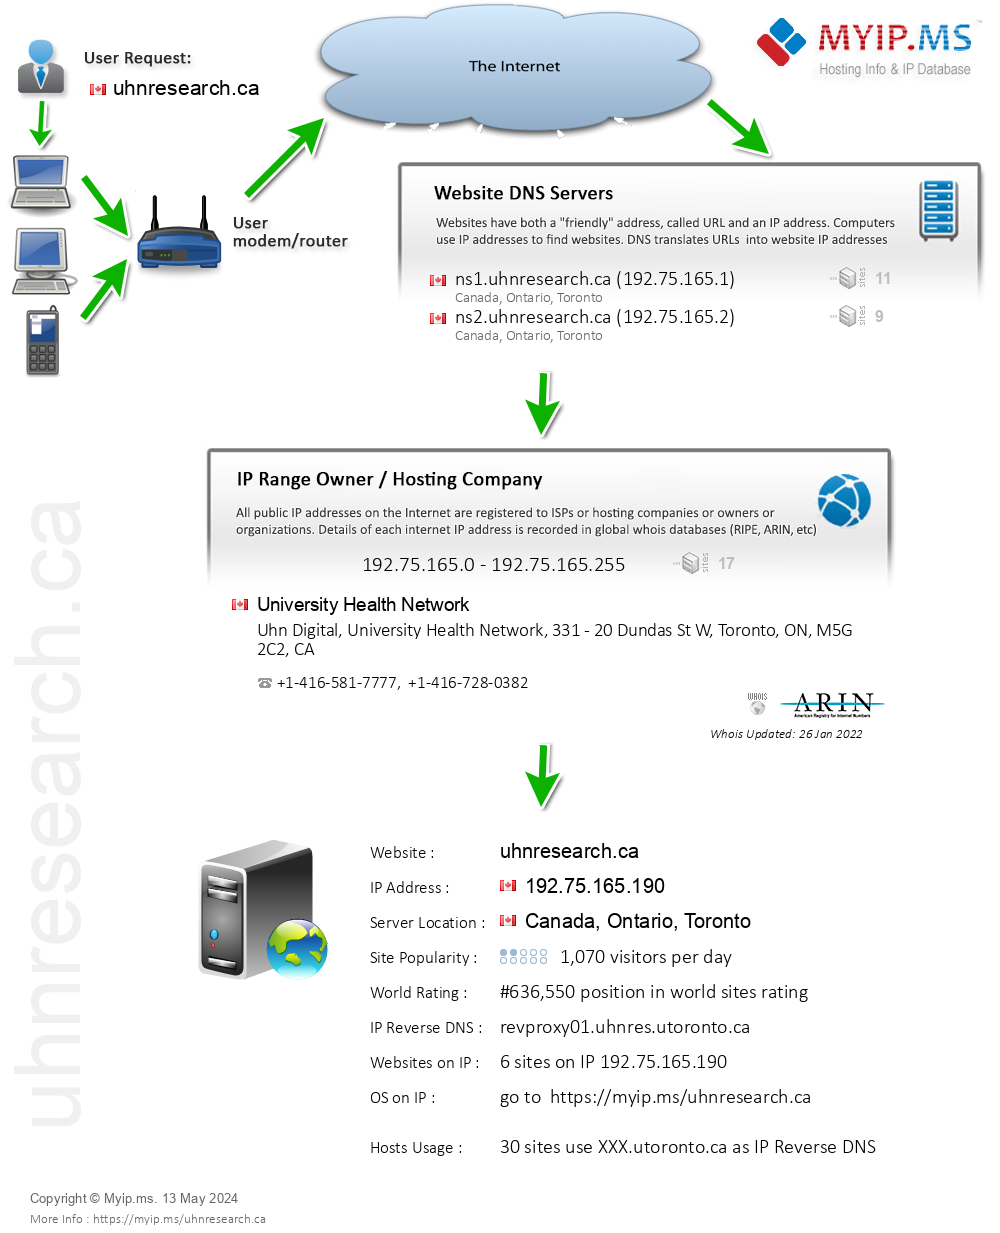 Uhnresearch.ca - Website Hosting Visual IP Diagram